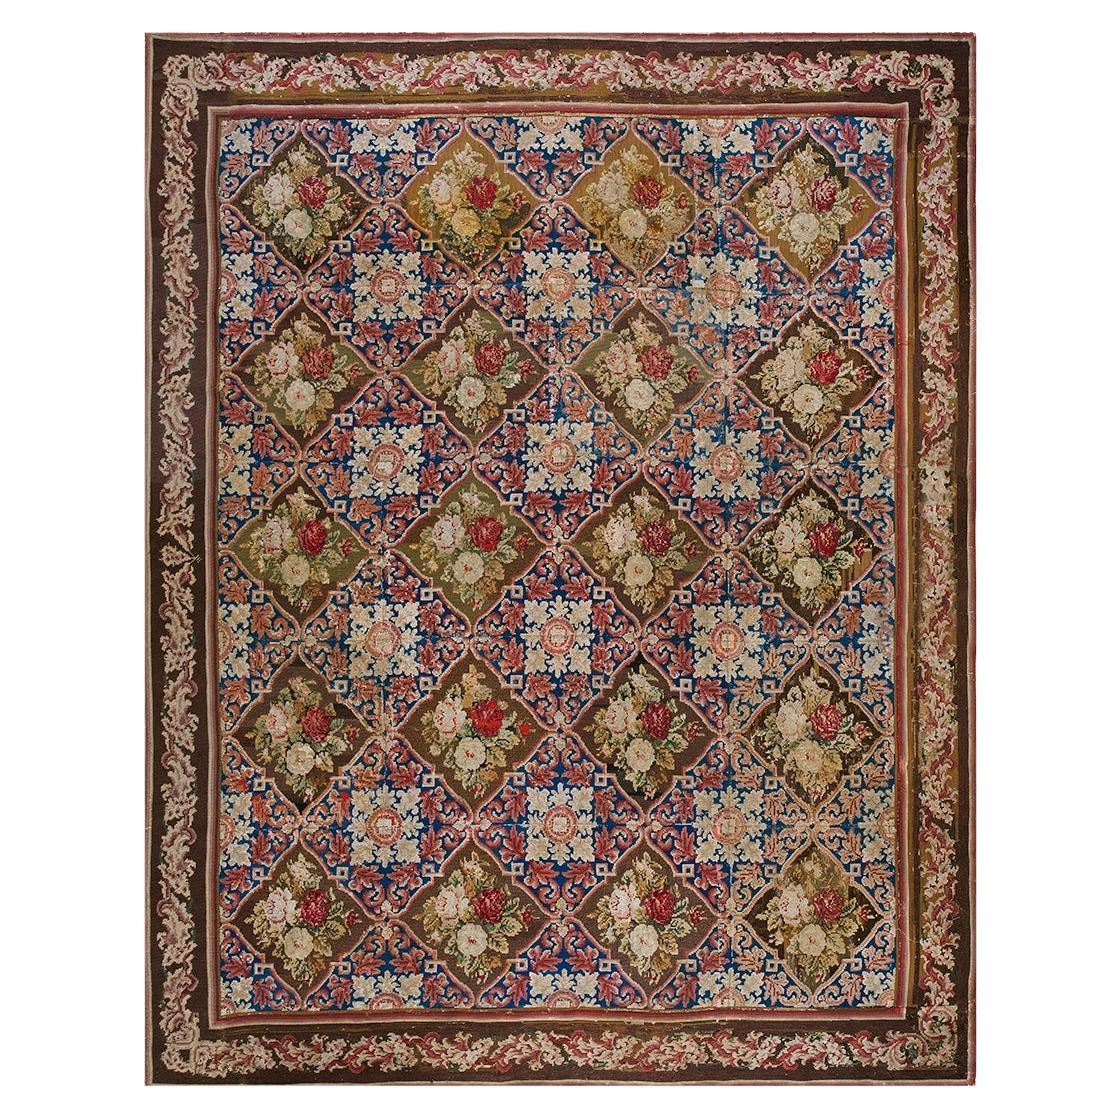 19th Century English Needlepoint Carpet ( 7'6" x 9'3" - 230 x 282 )